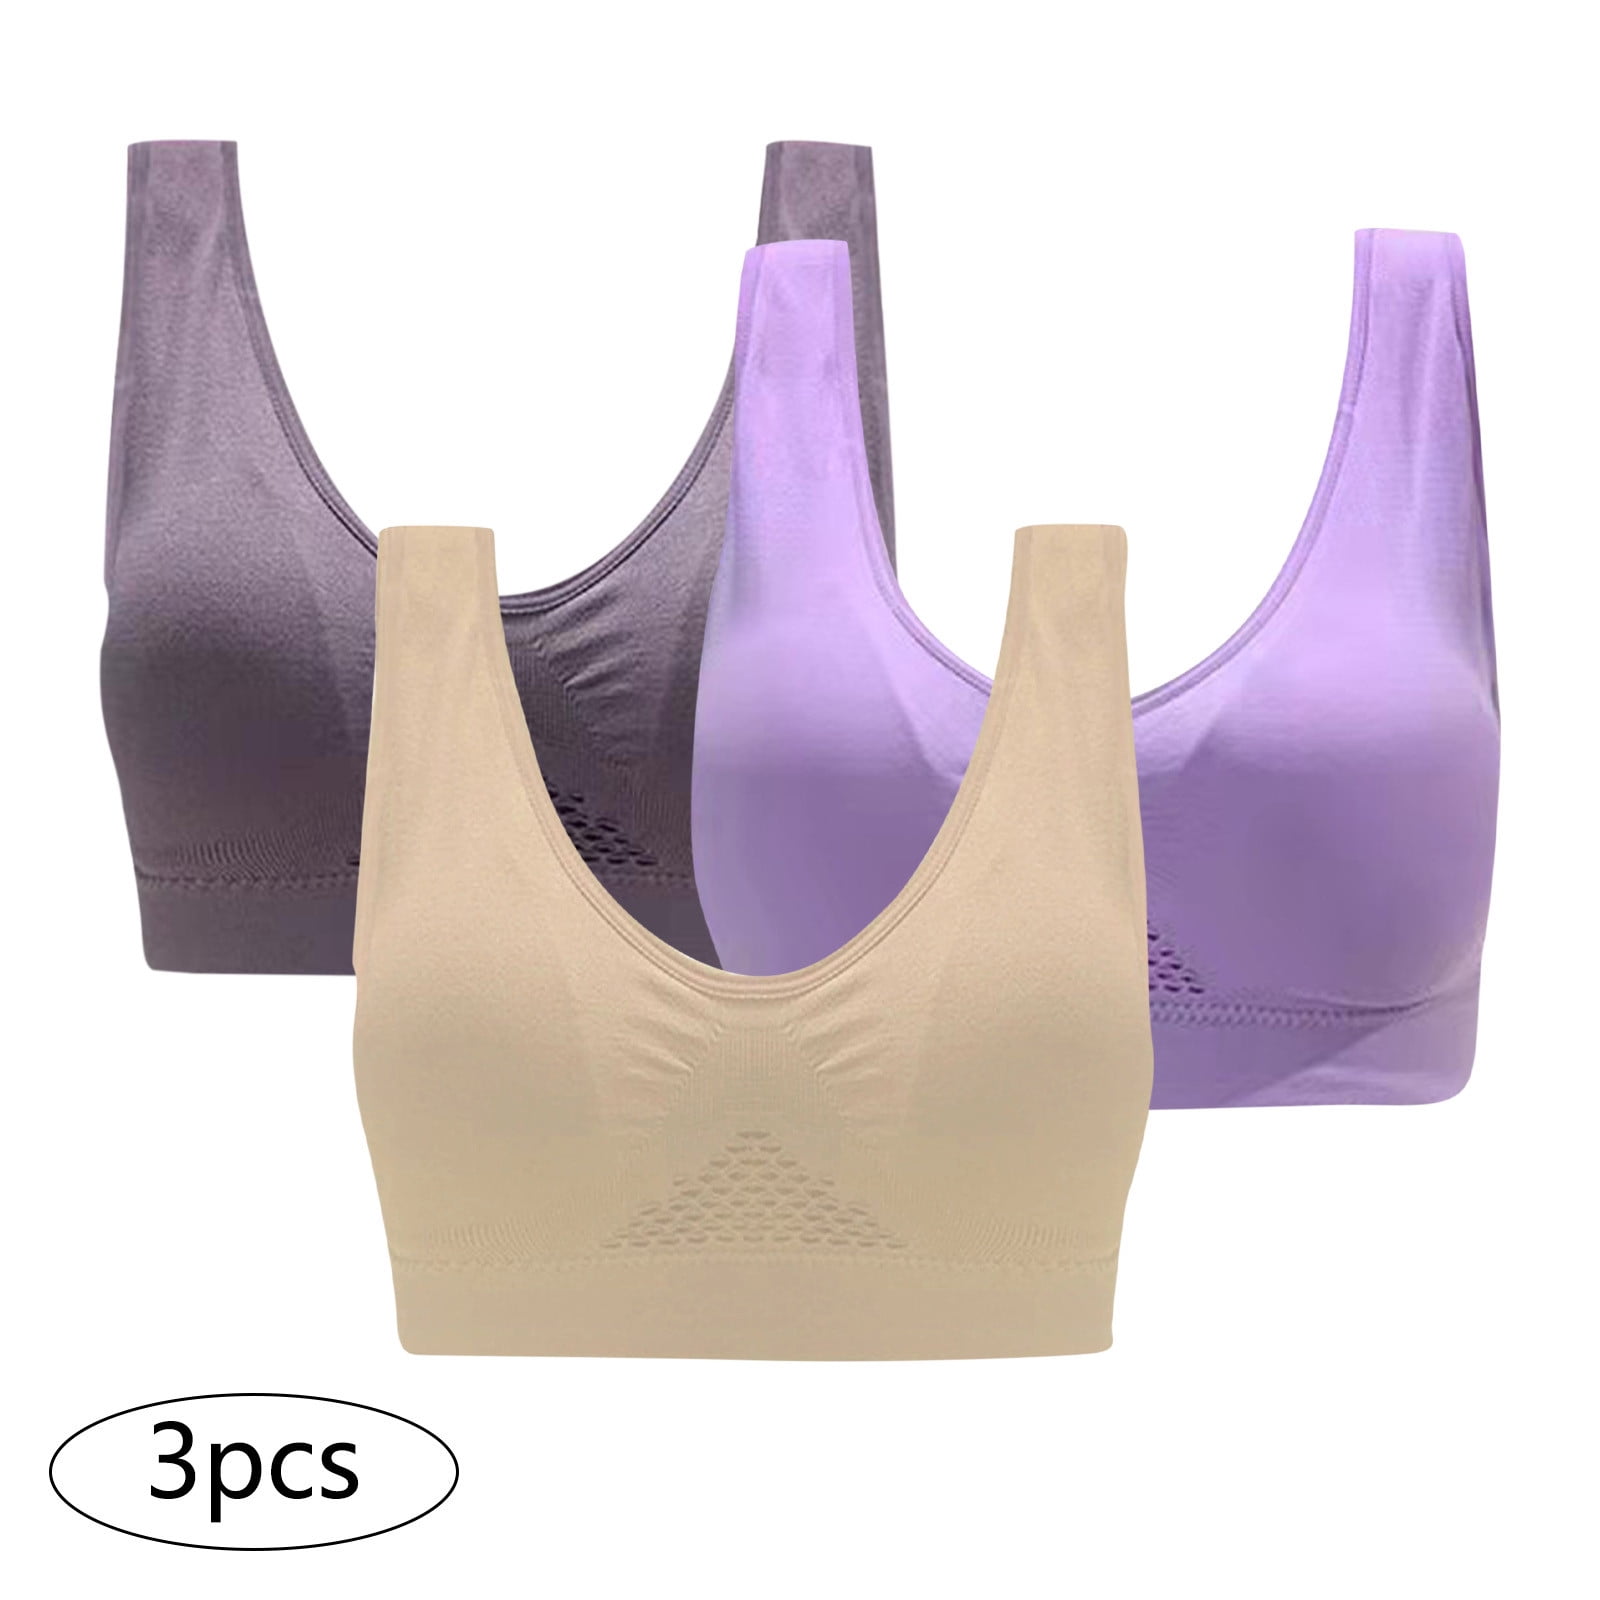 Joyspun Women's Sheer Mesh Add Two Sizes Push Up Bra, Sizes 32A to 38C,  JS832 